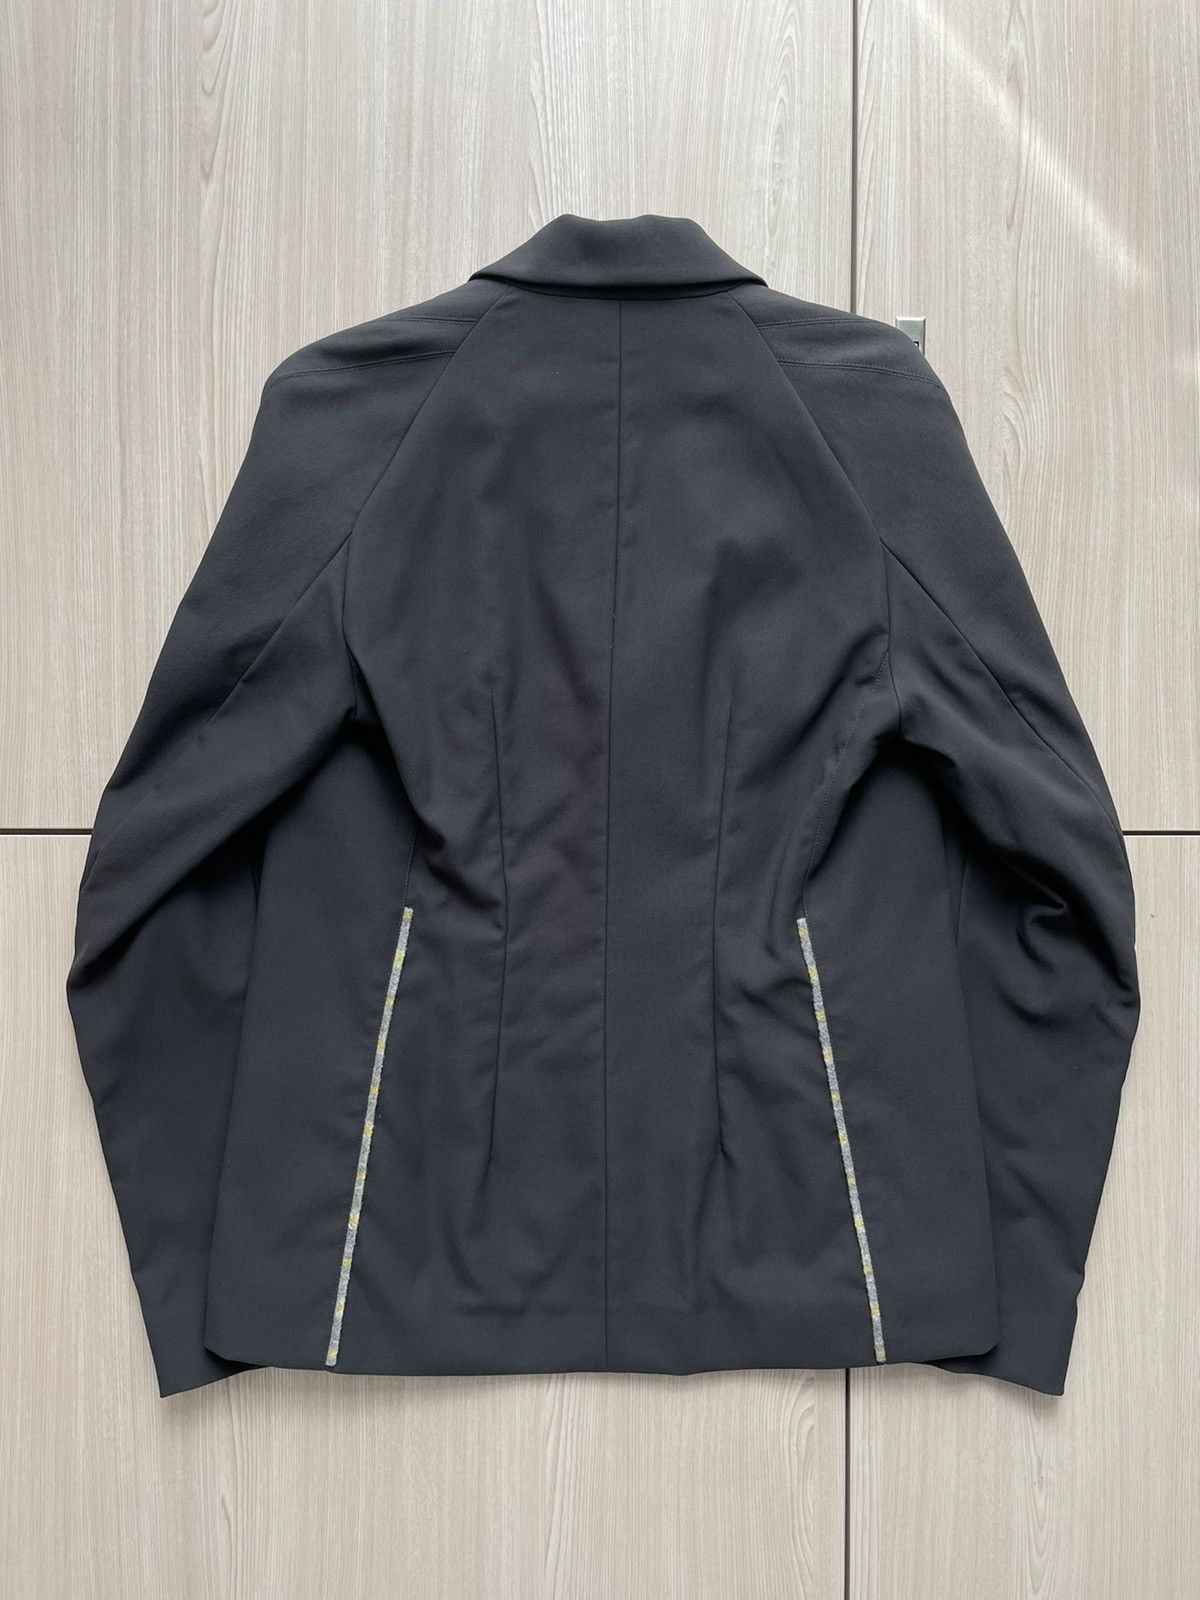 Kiko Kostadinov 00112021 FW21 Harkman Darted Shoulder Jacket | Grailed